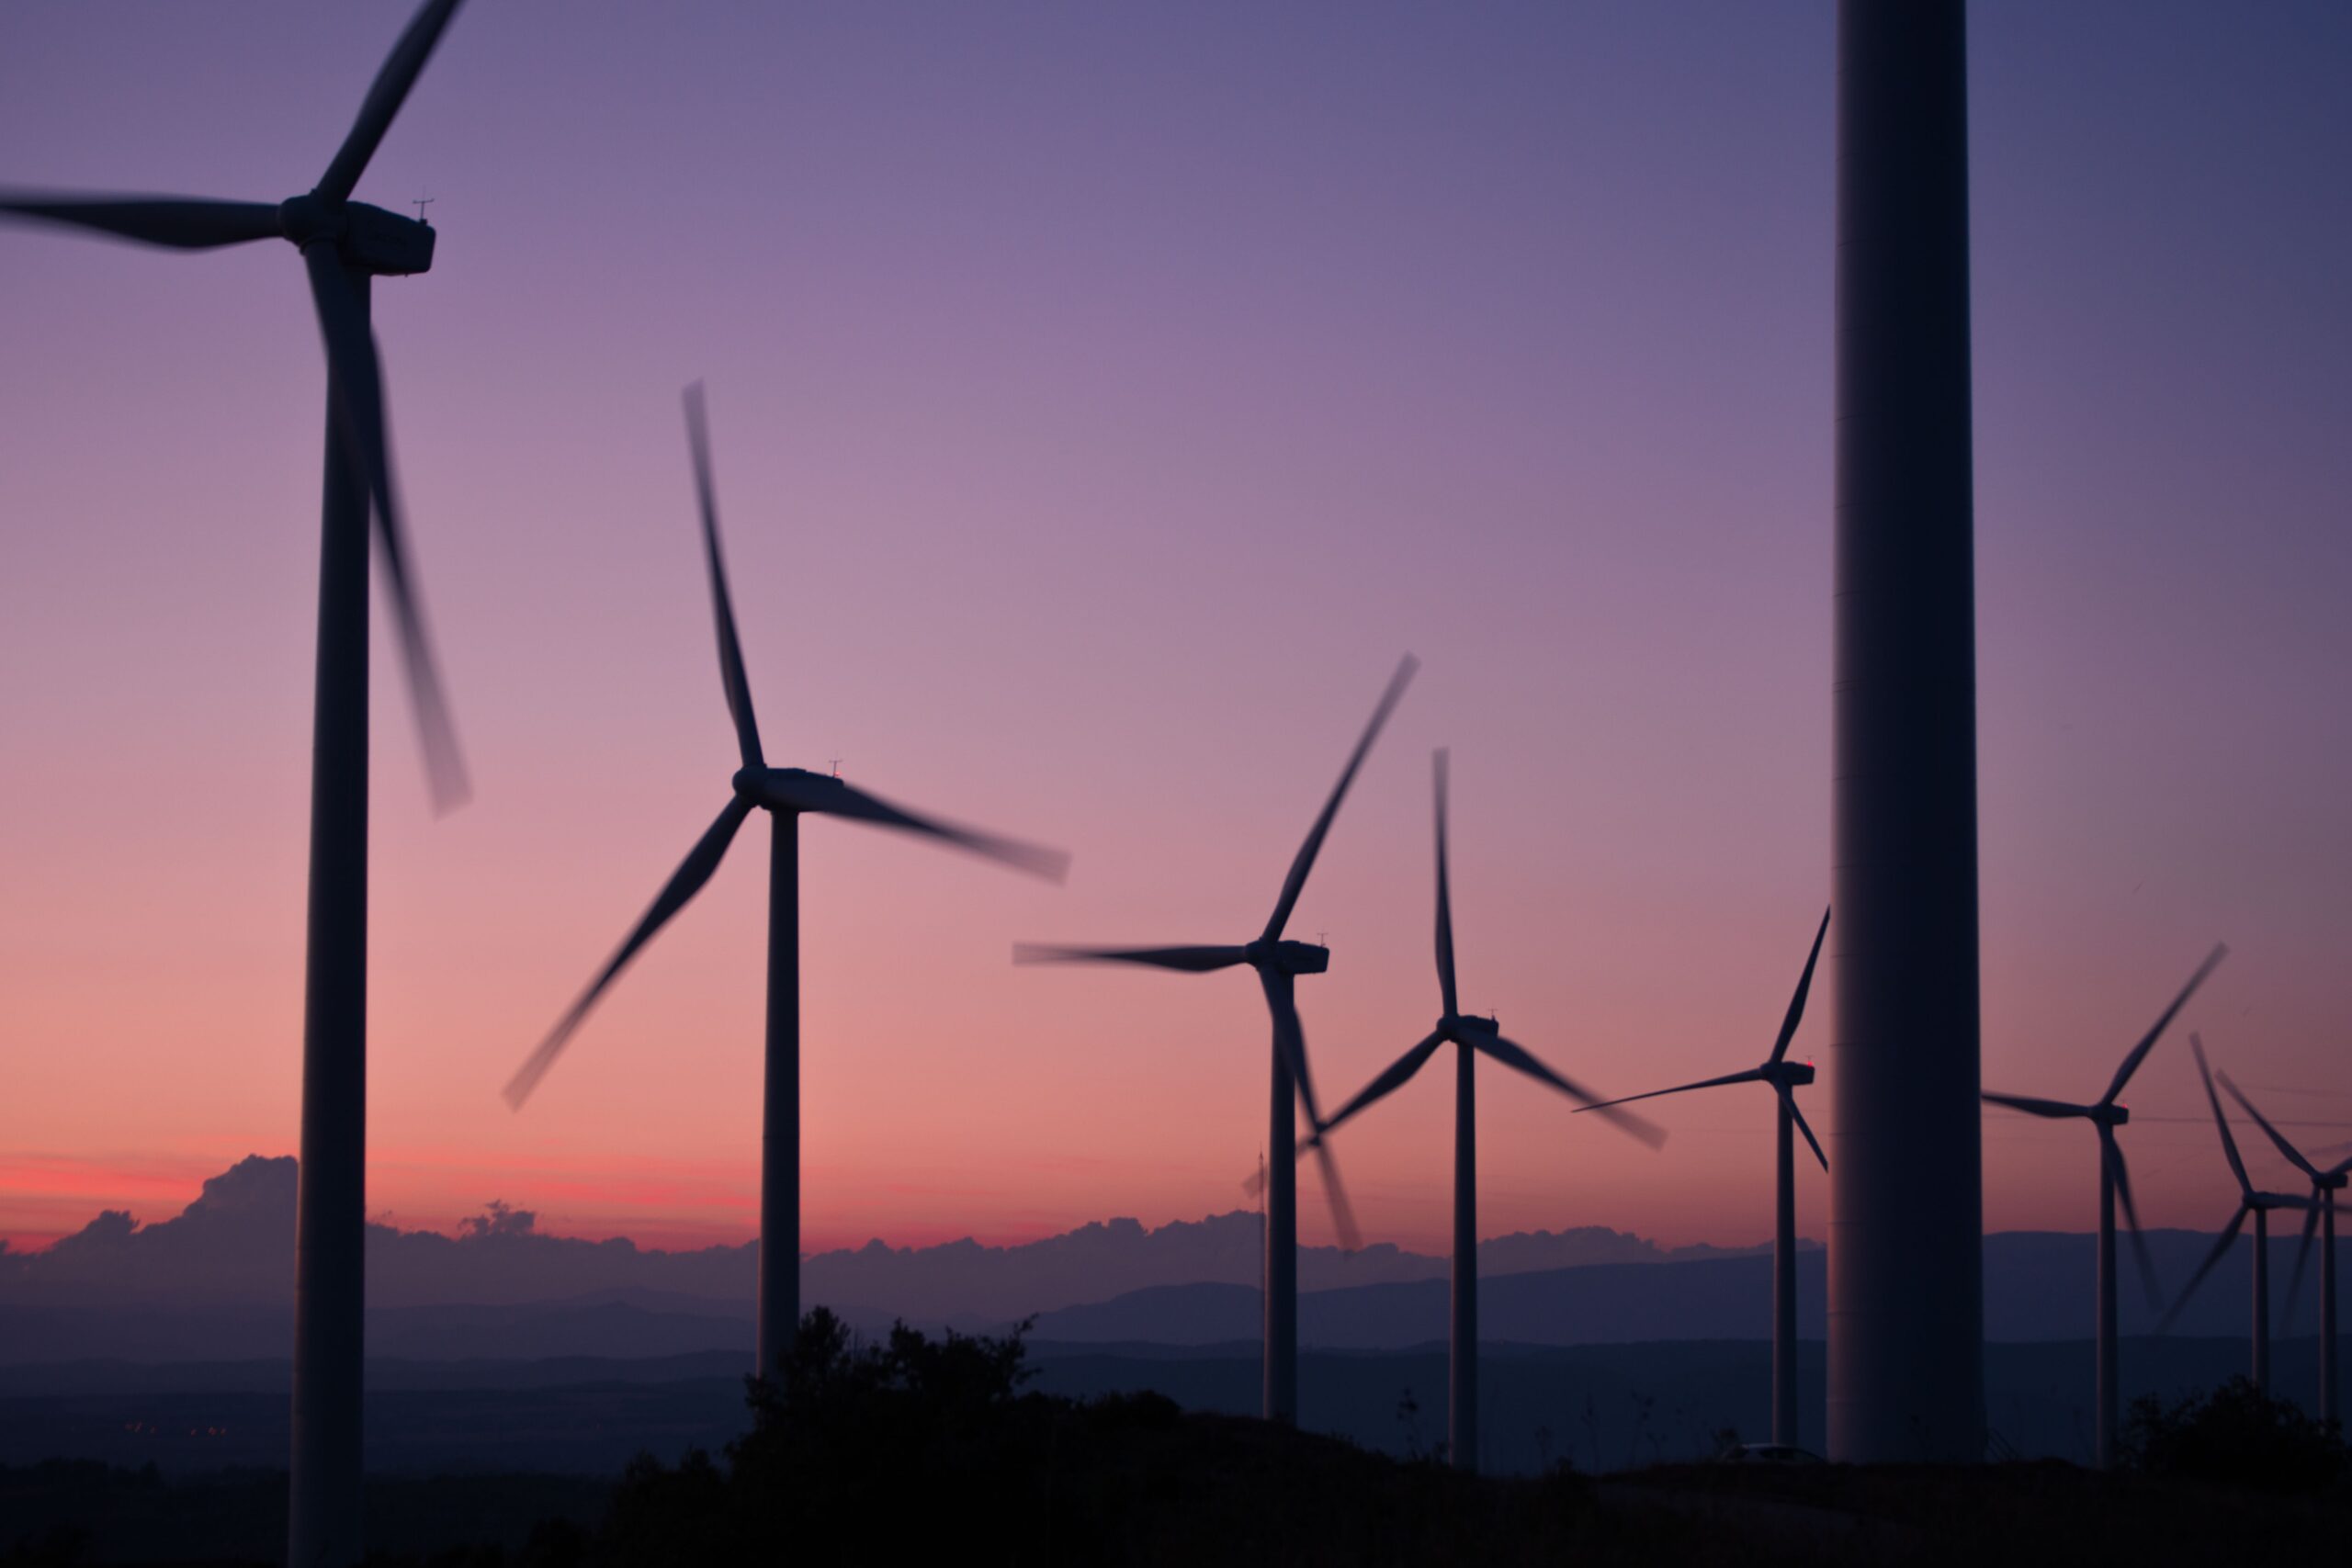 Battle Born Batteries: Wind turbines sit in a field at sunset